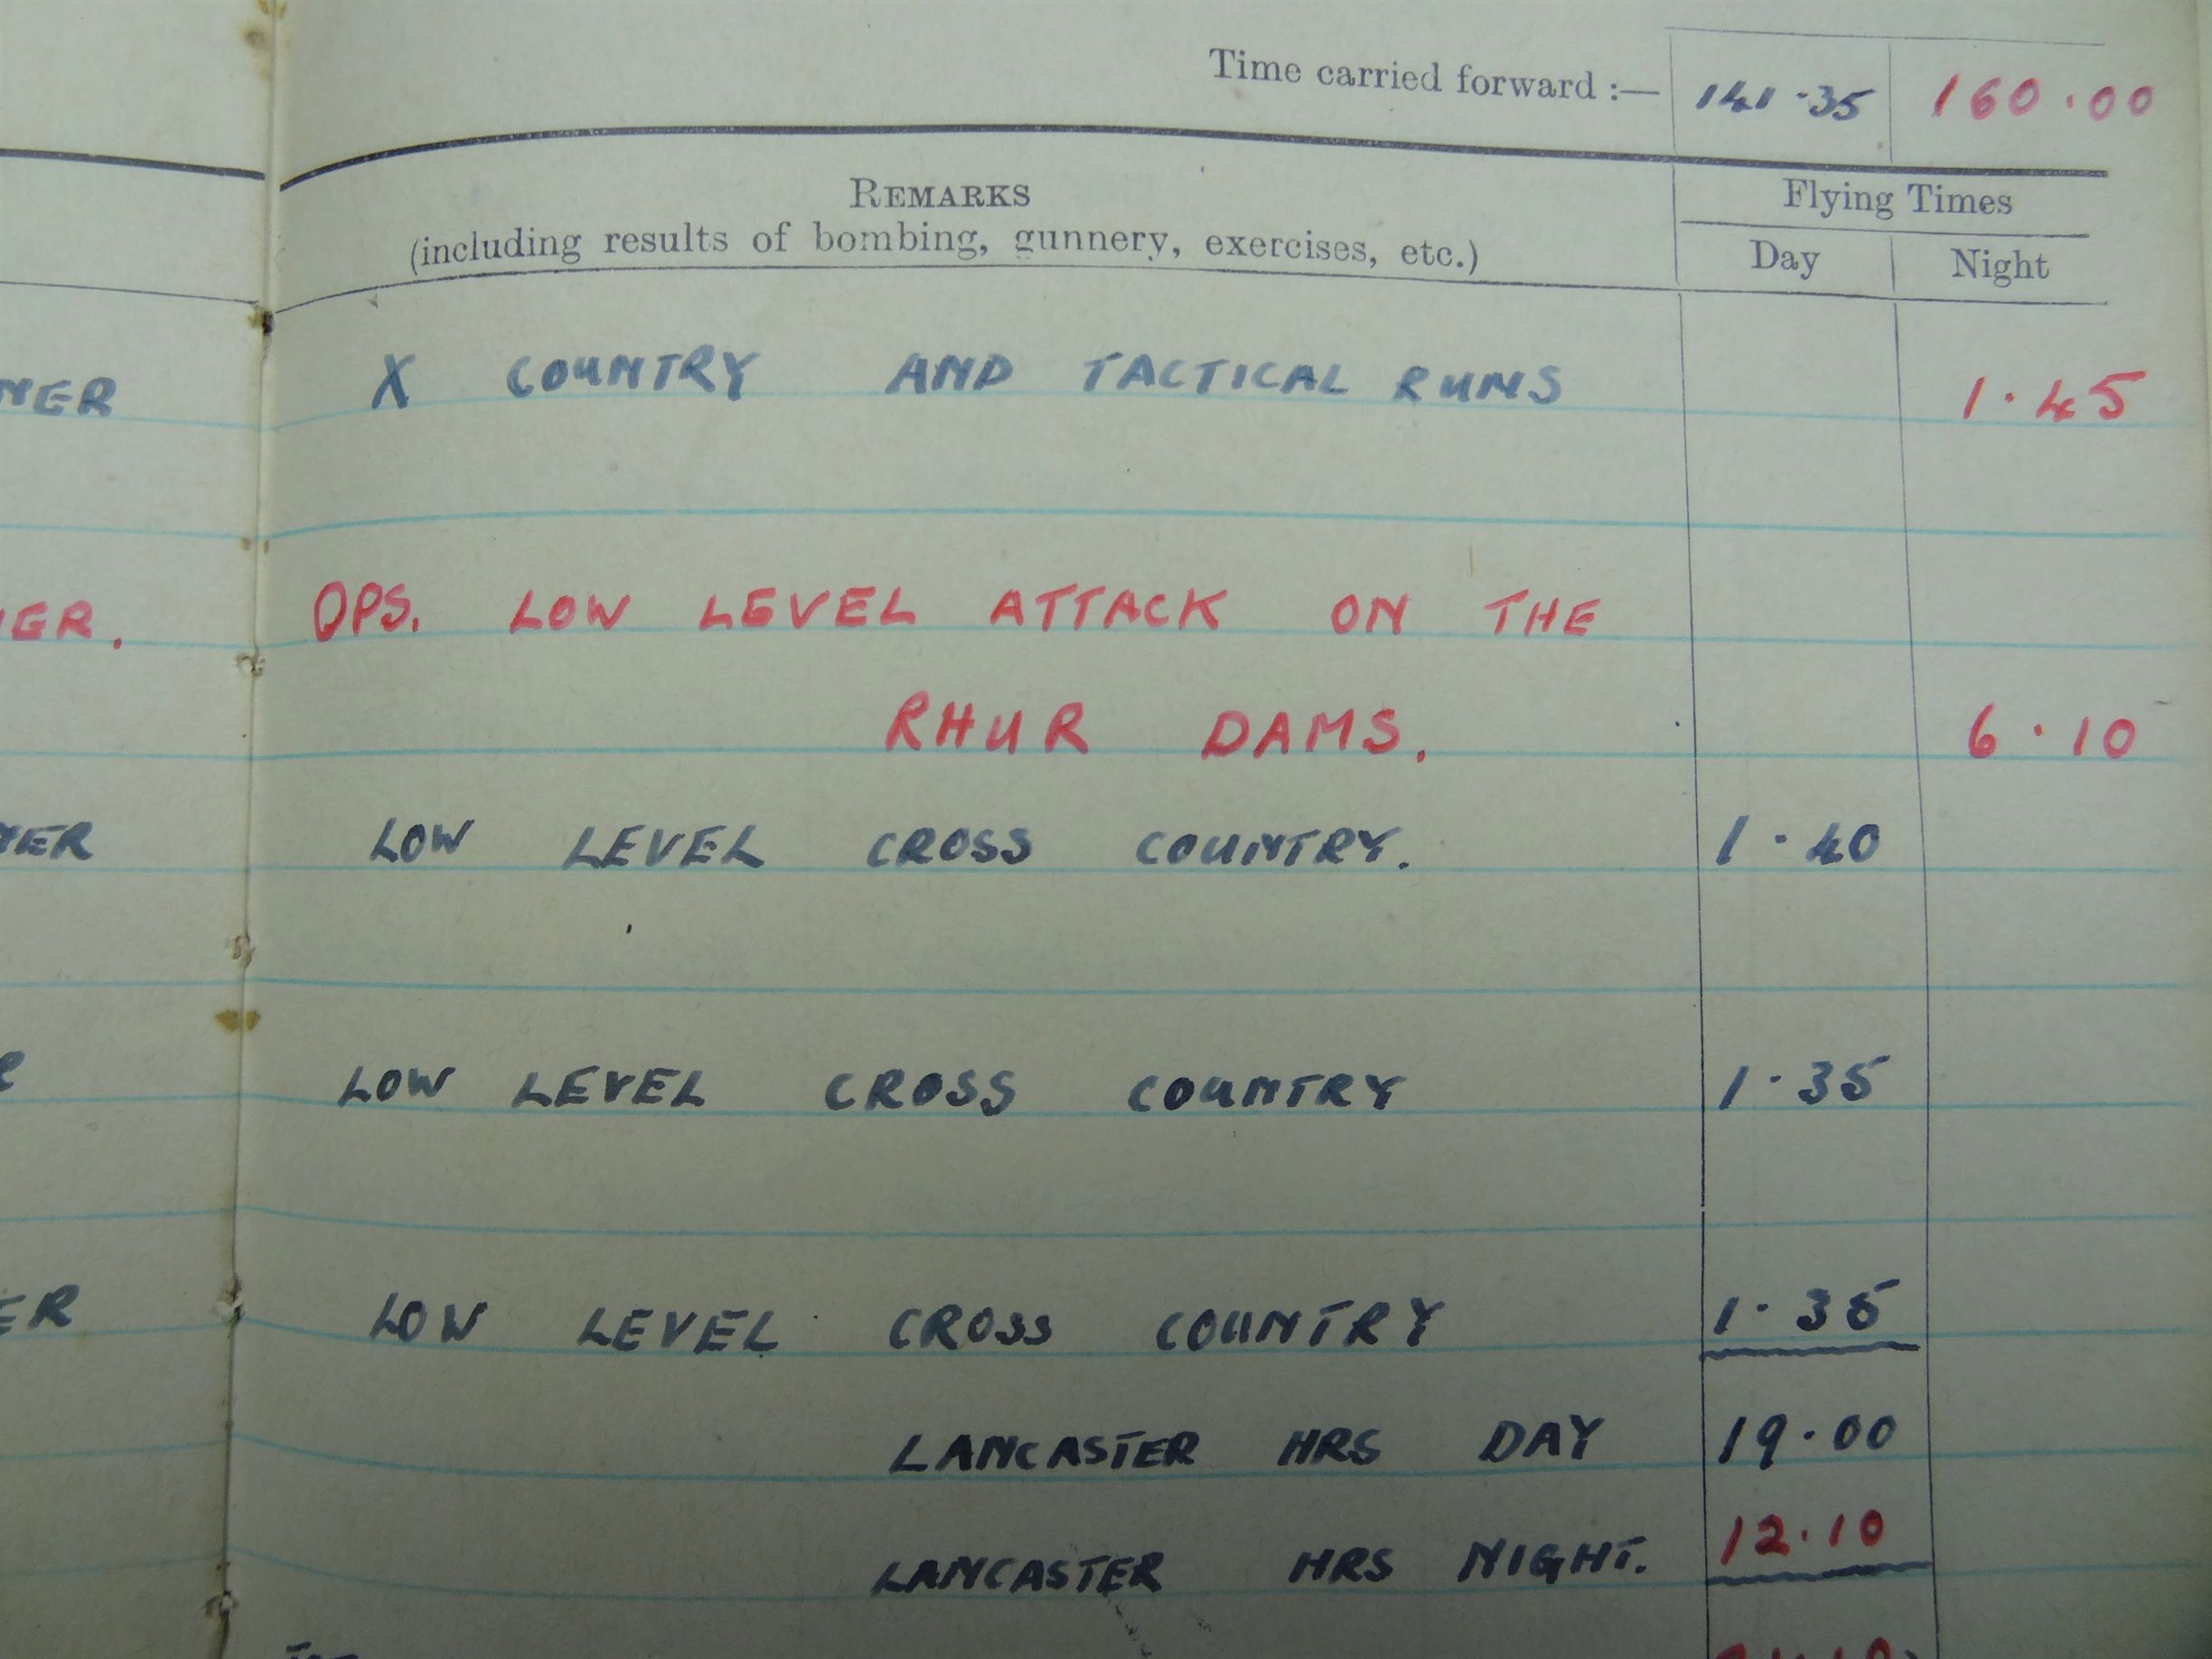 Wilkinsons Log Book 1943 Dams Raid Entry